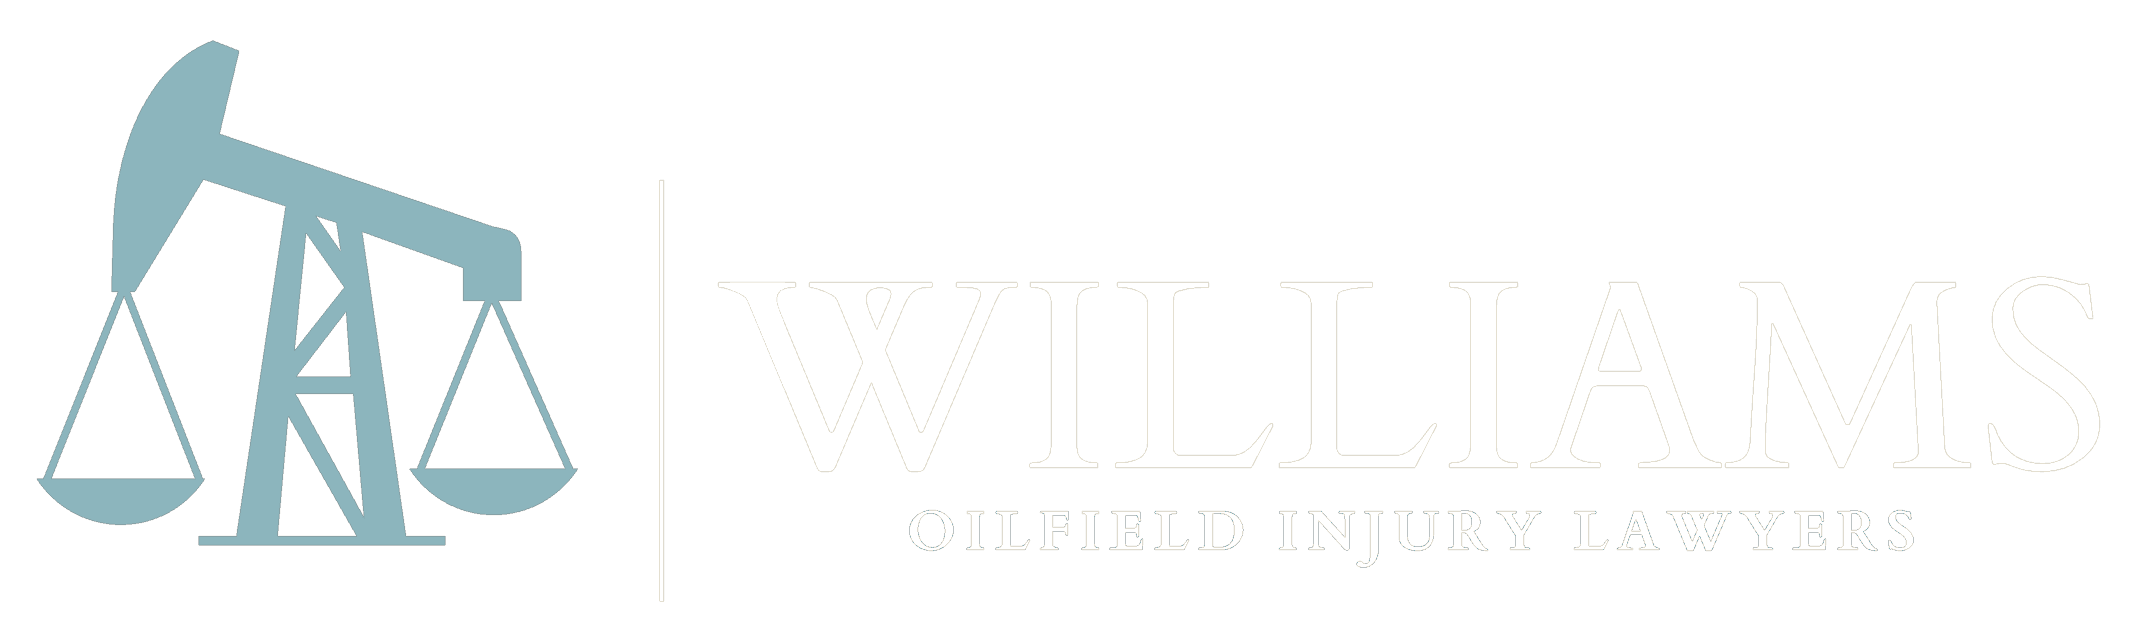 Williams Attorneys